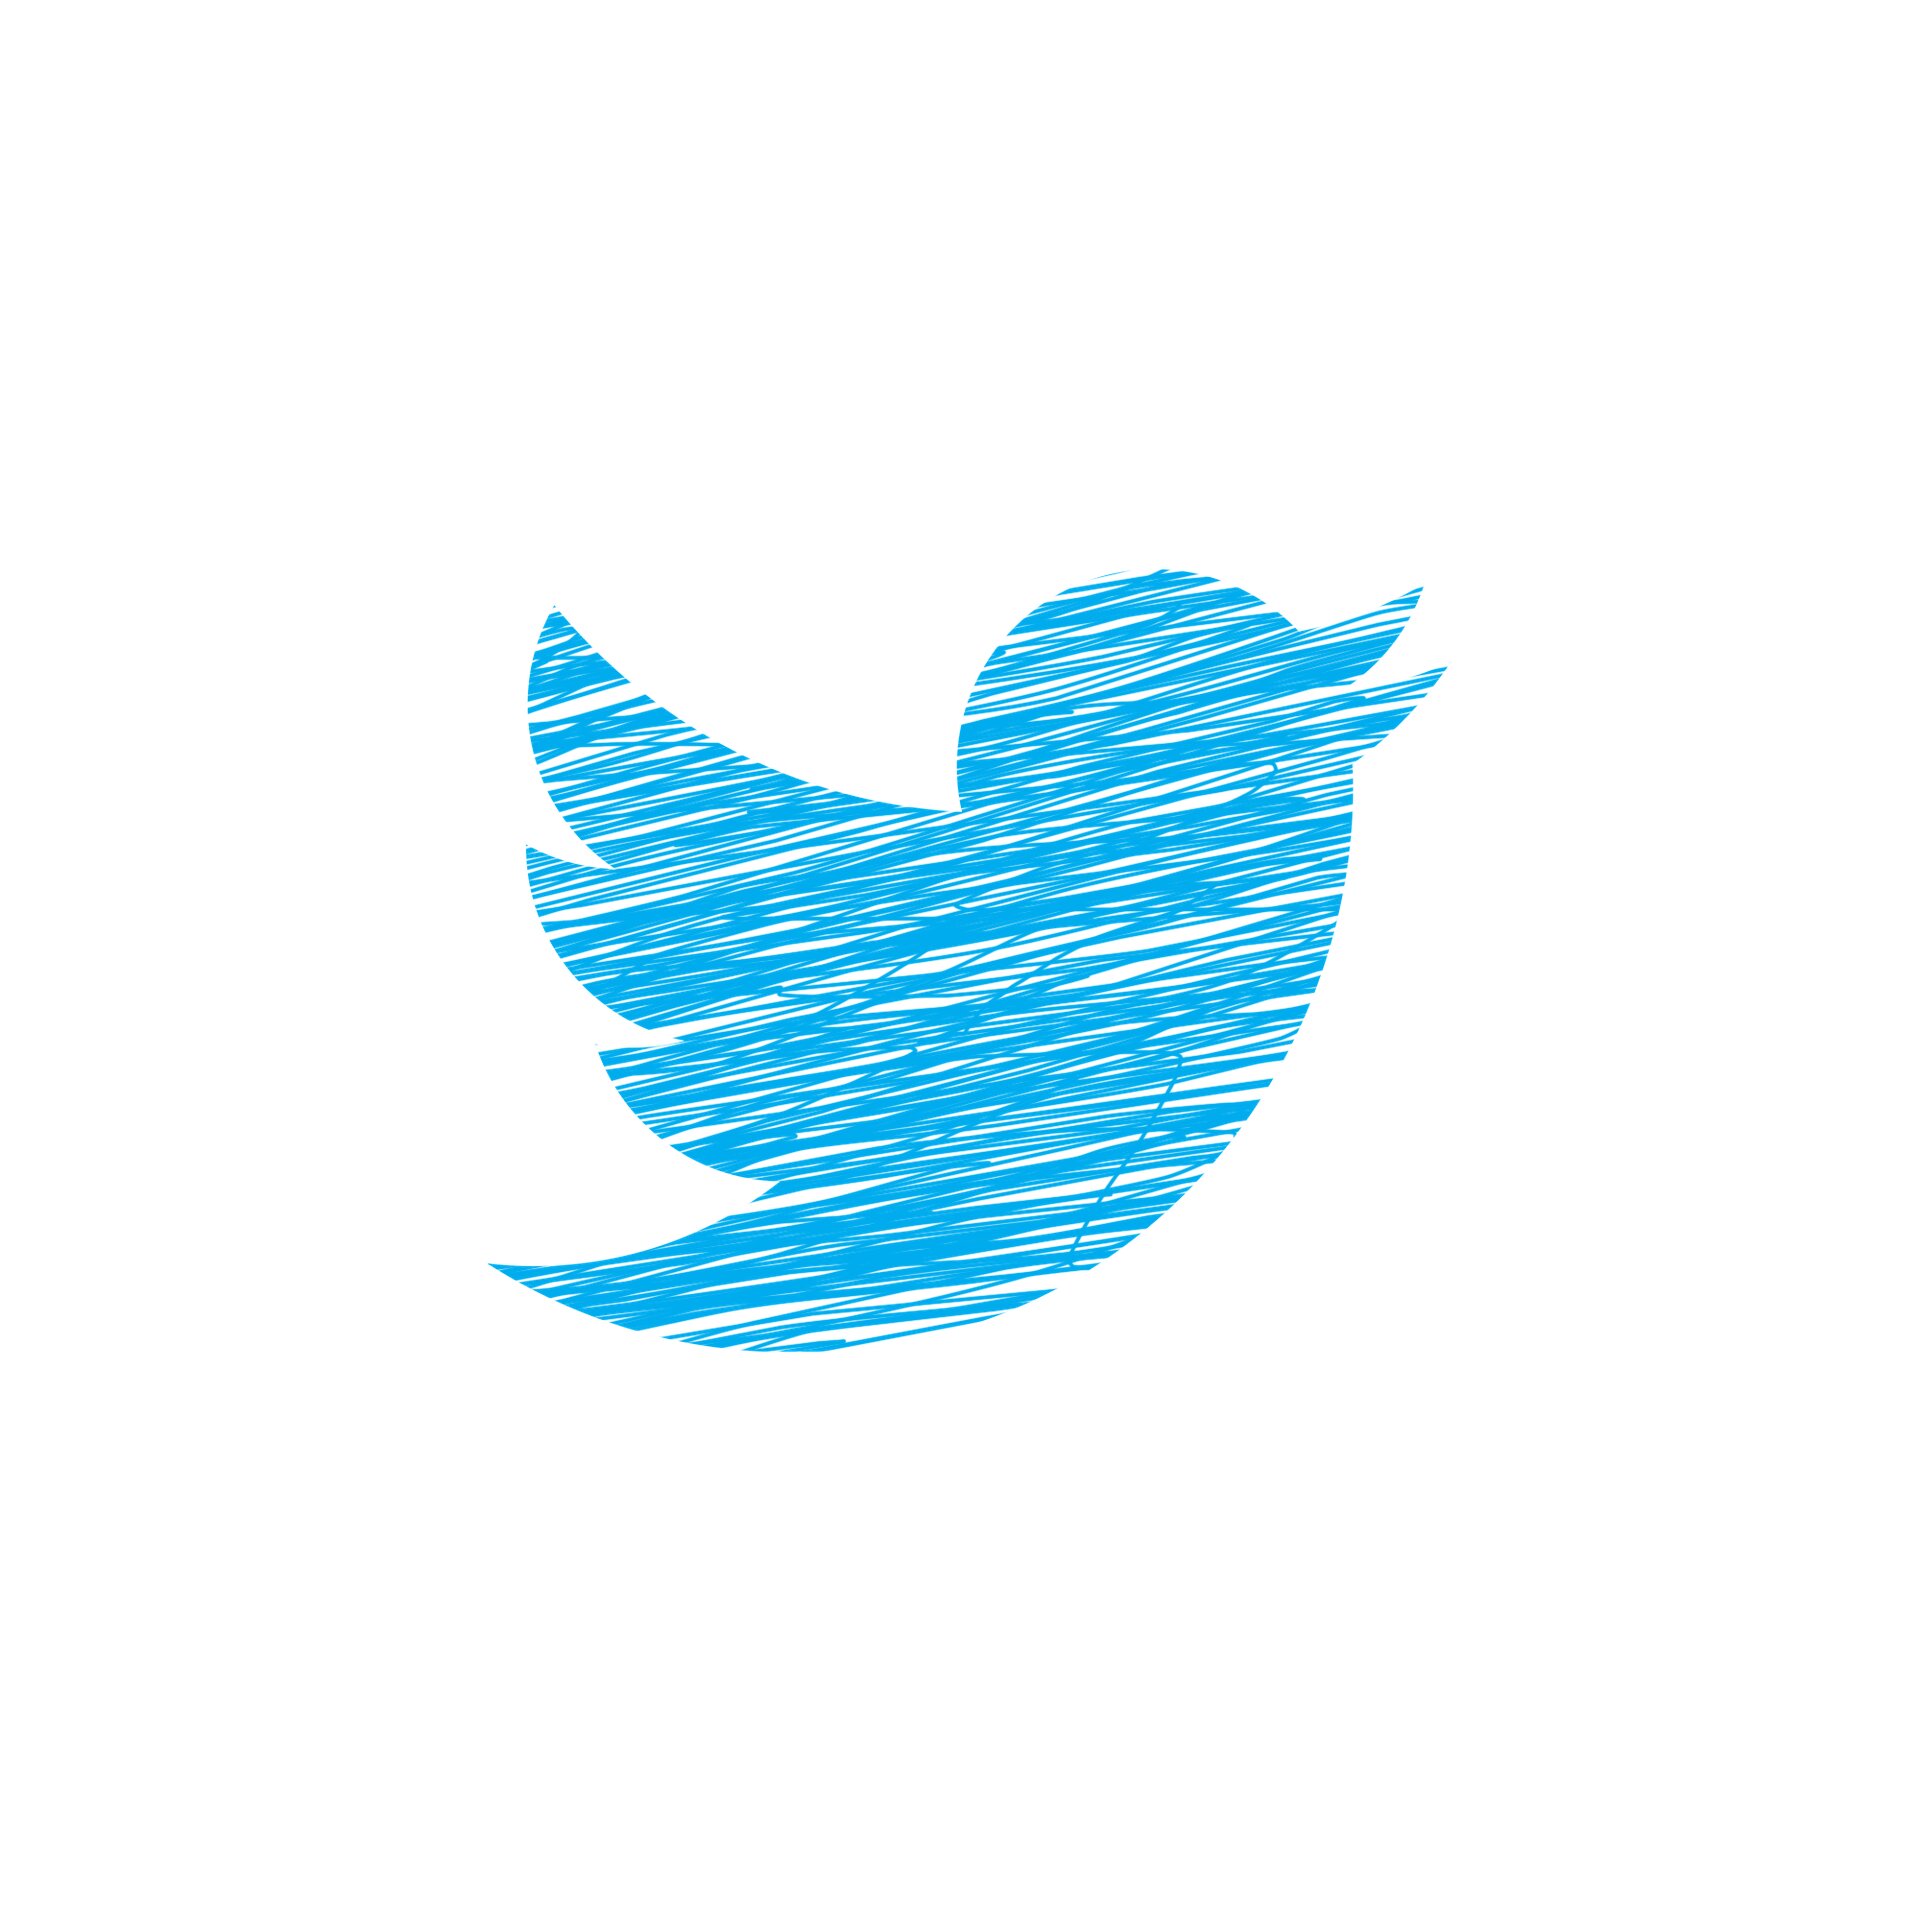 Twitter ad revenue to plummet 28% in 2023: forecast